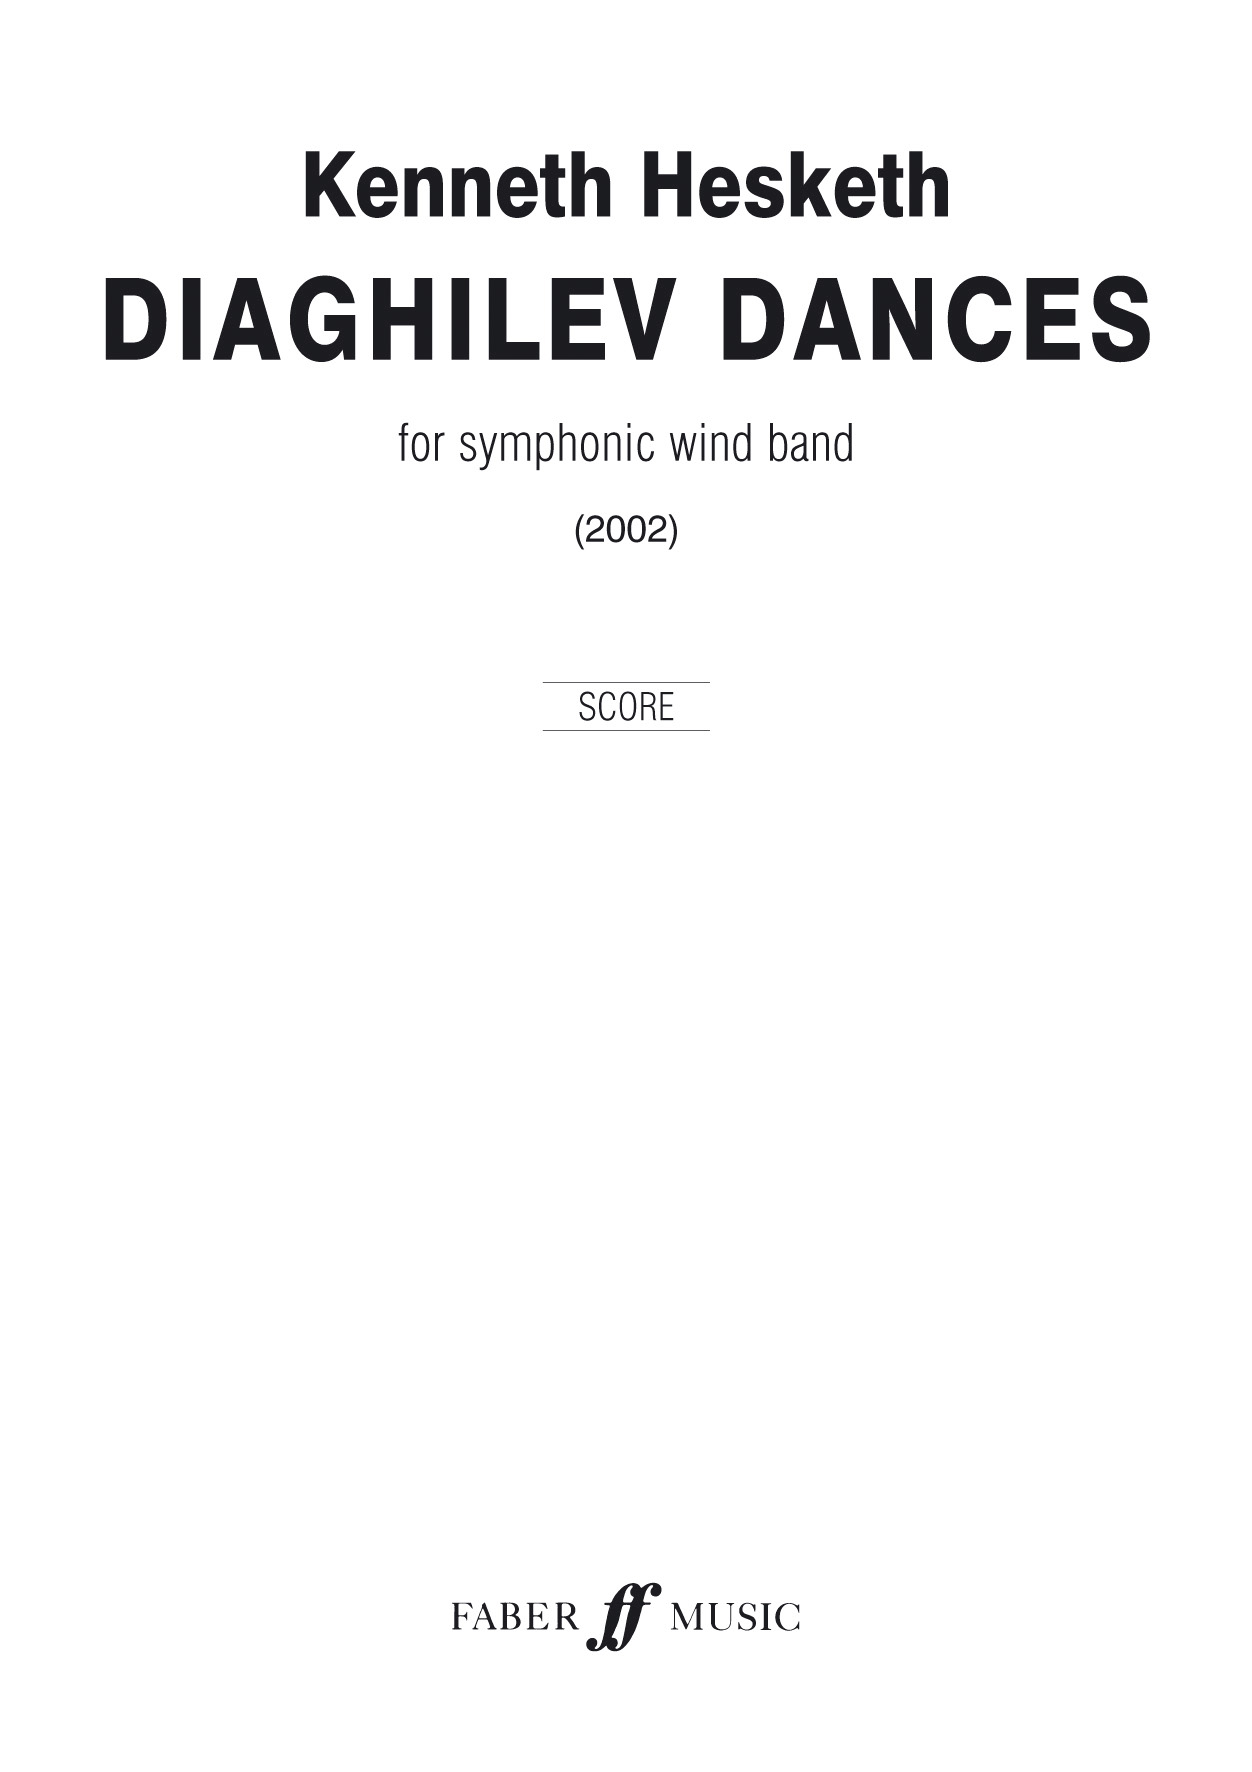 Kenneth Hesketh: Diaghilev Dances. Wind band: Concert Band